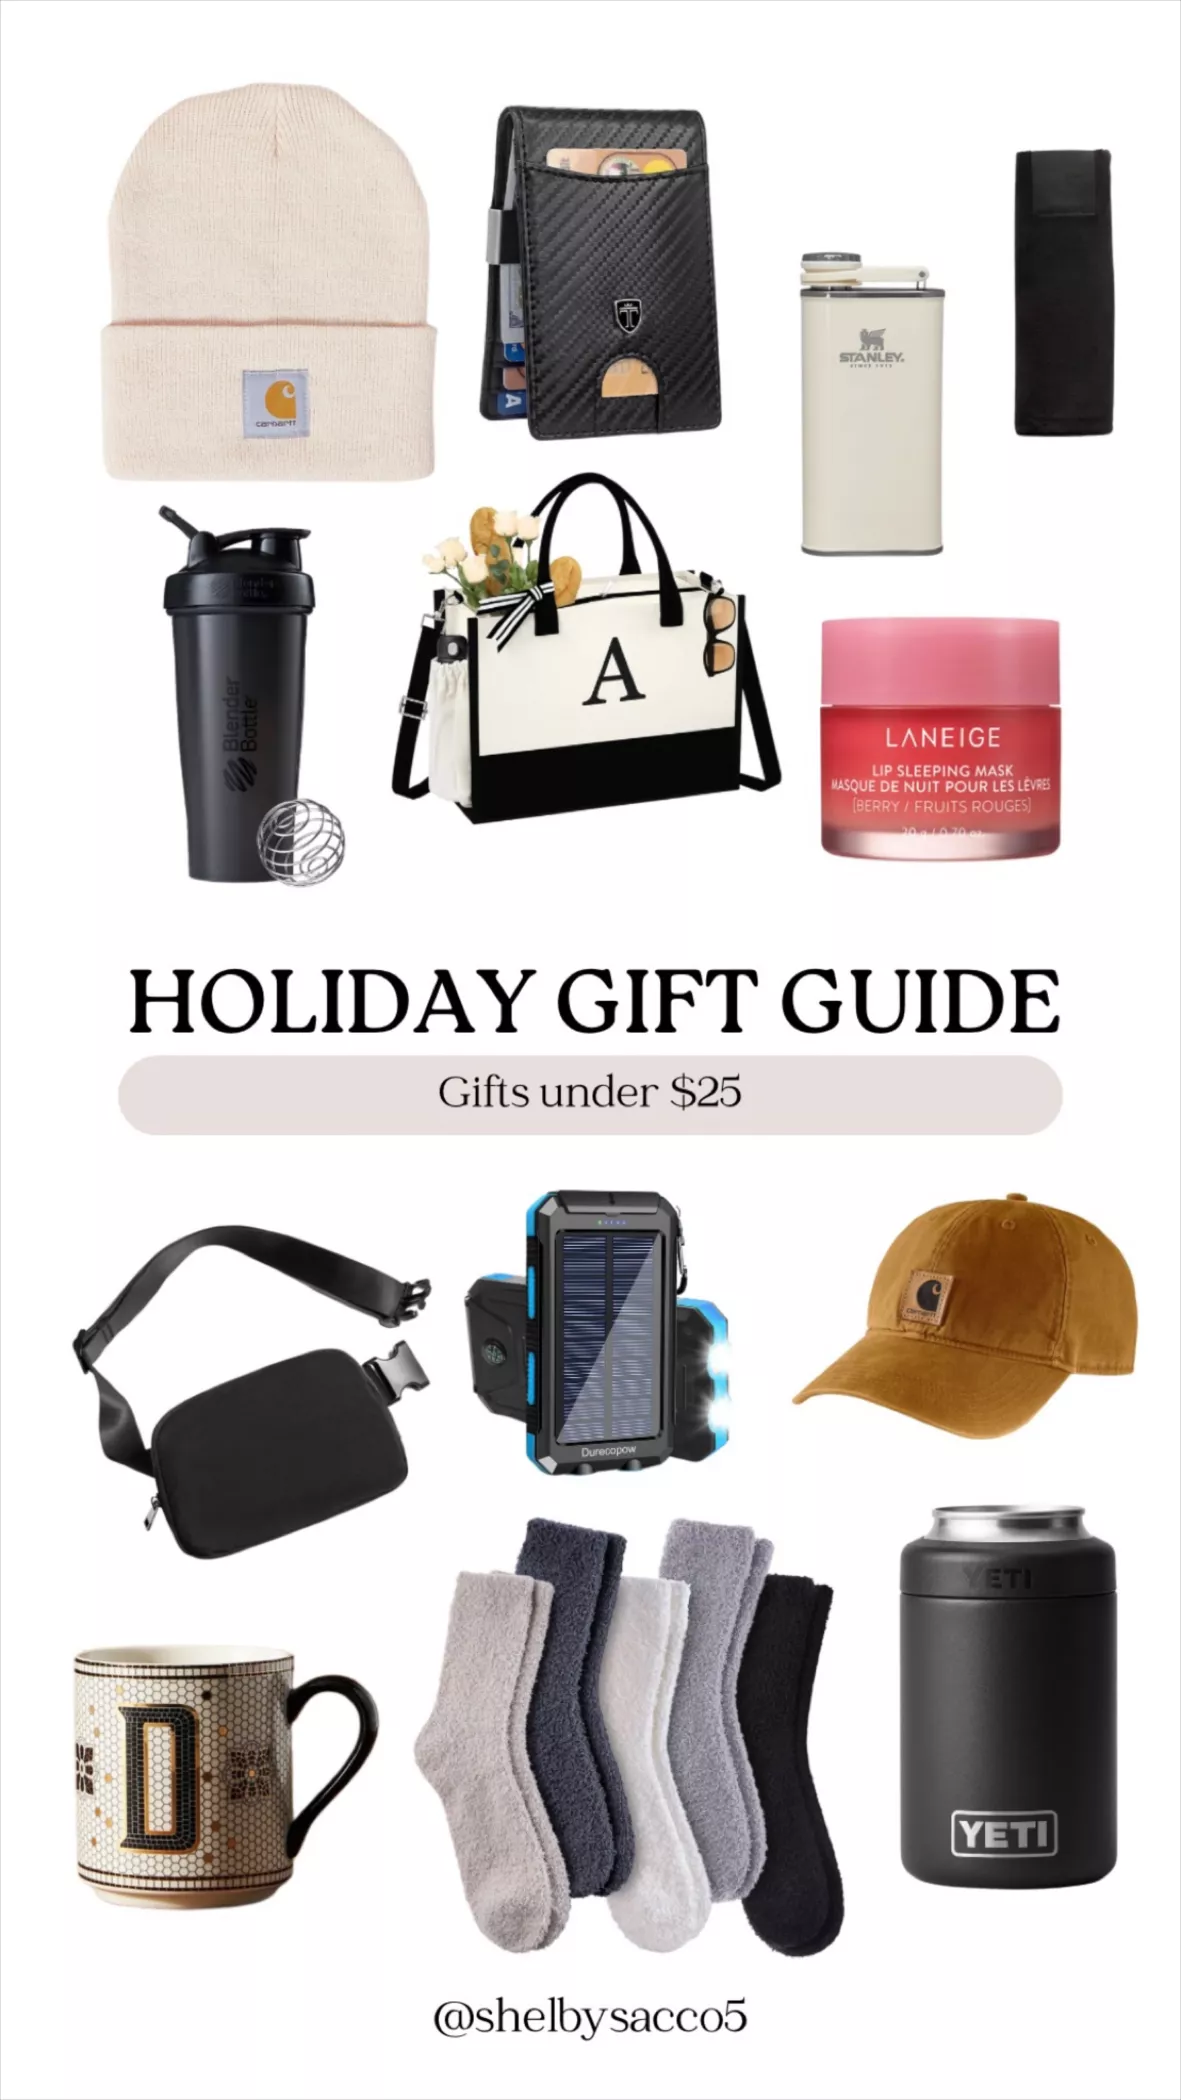 M2aldetalle_interiorismo's Viajar Gift Guide on LTK